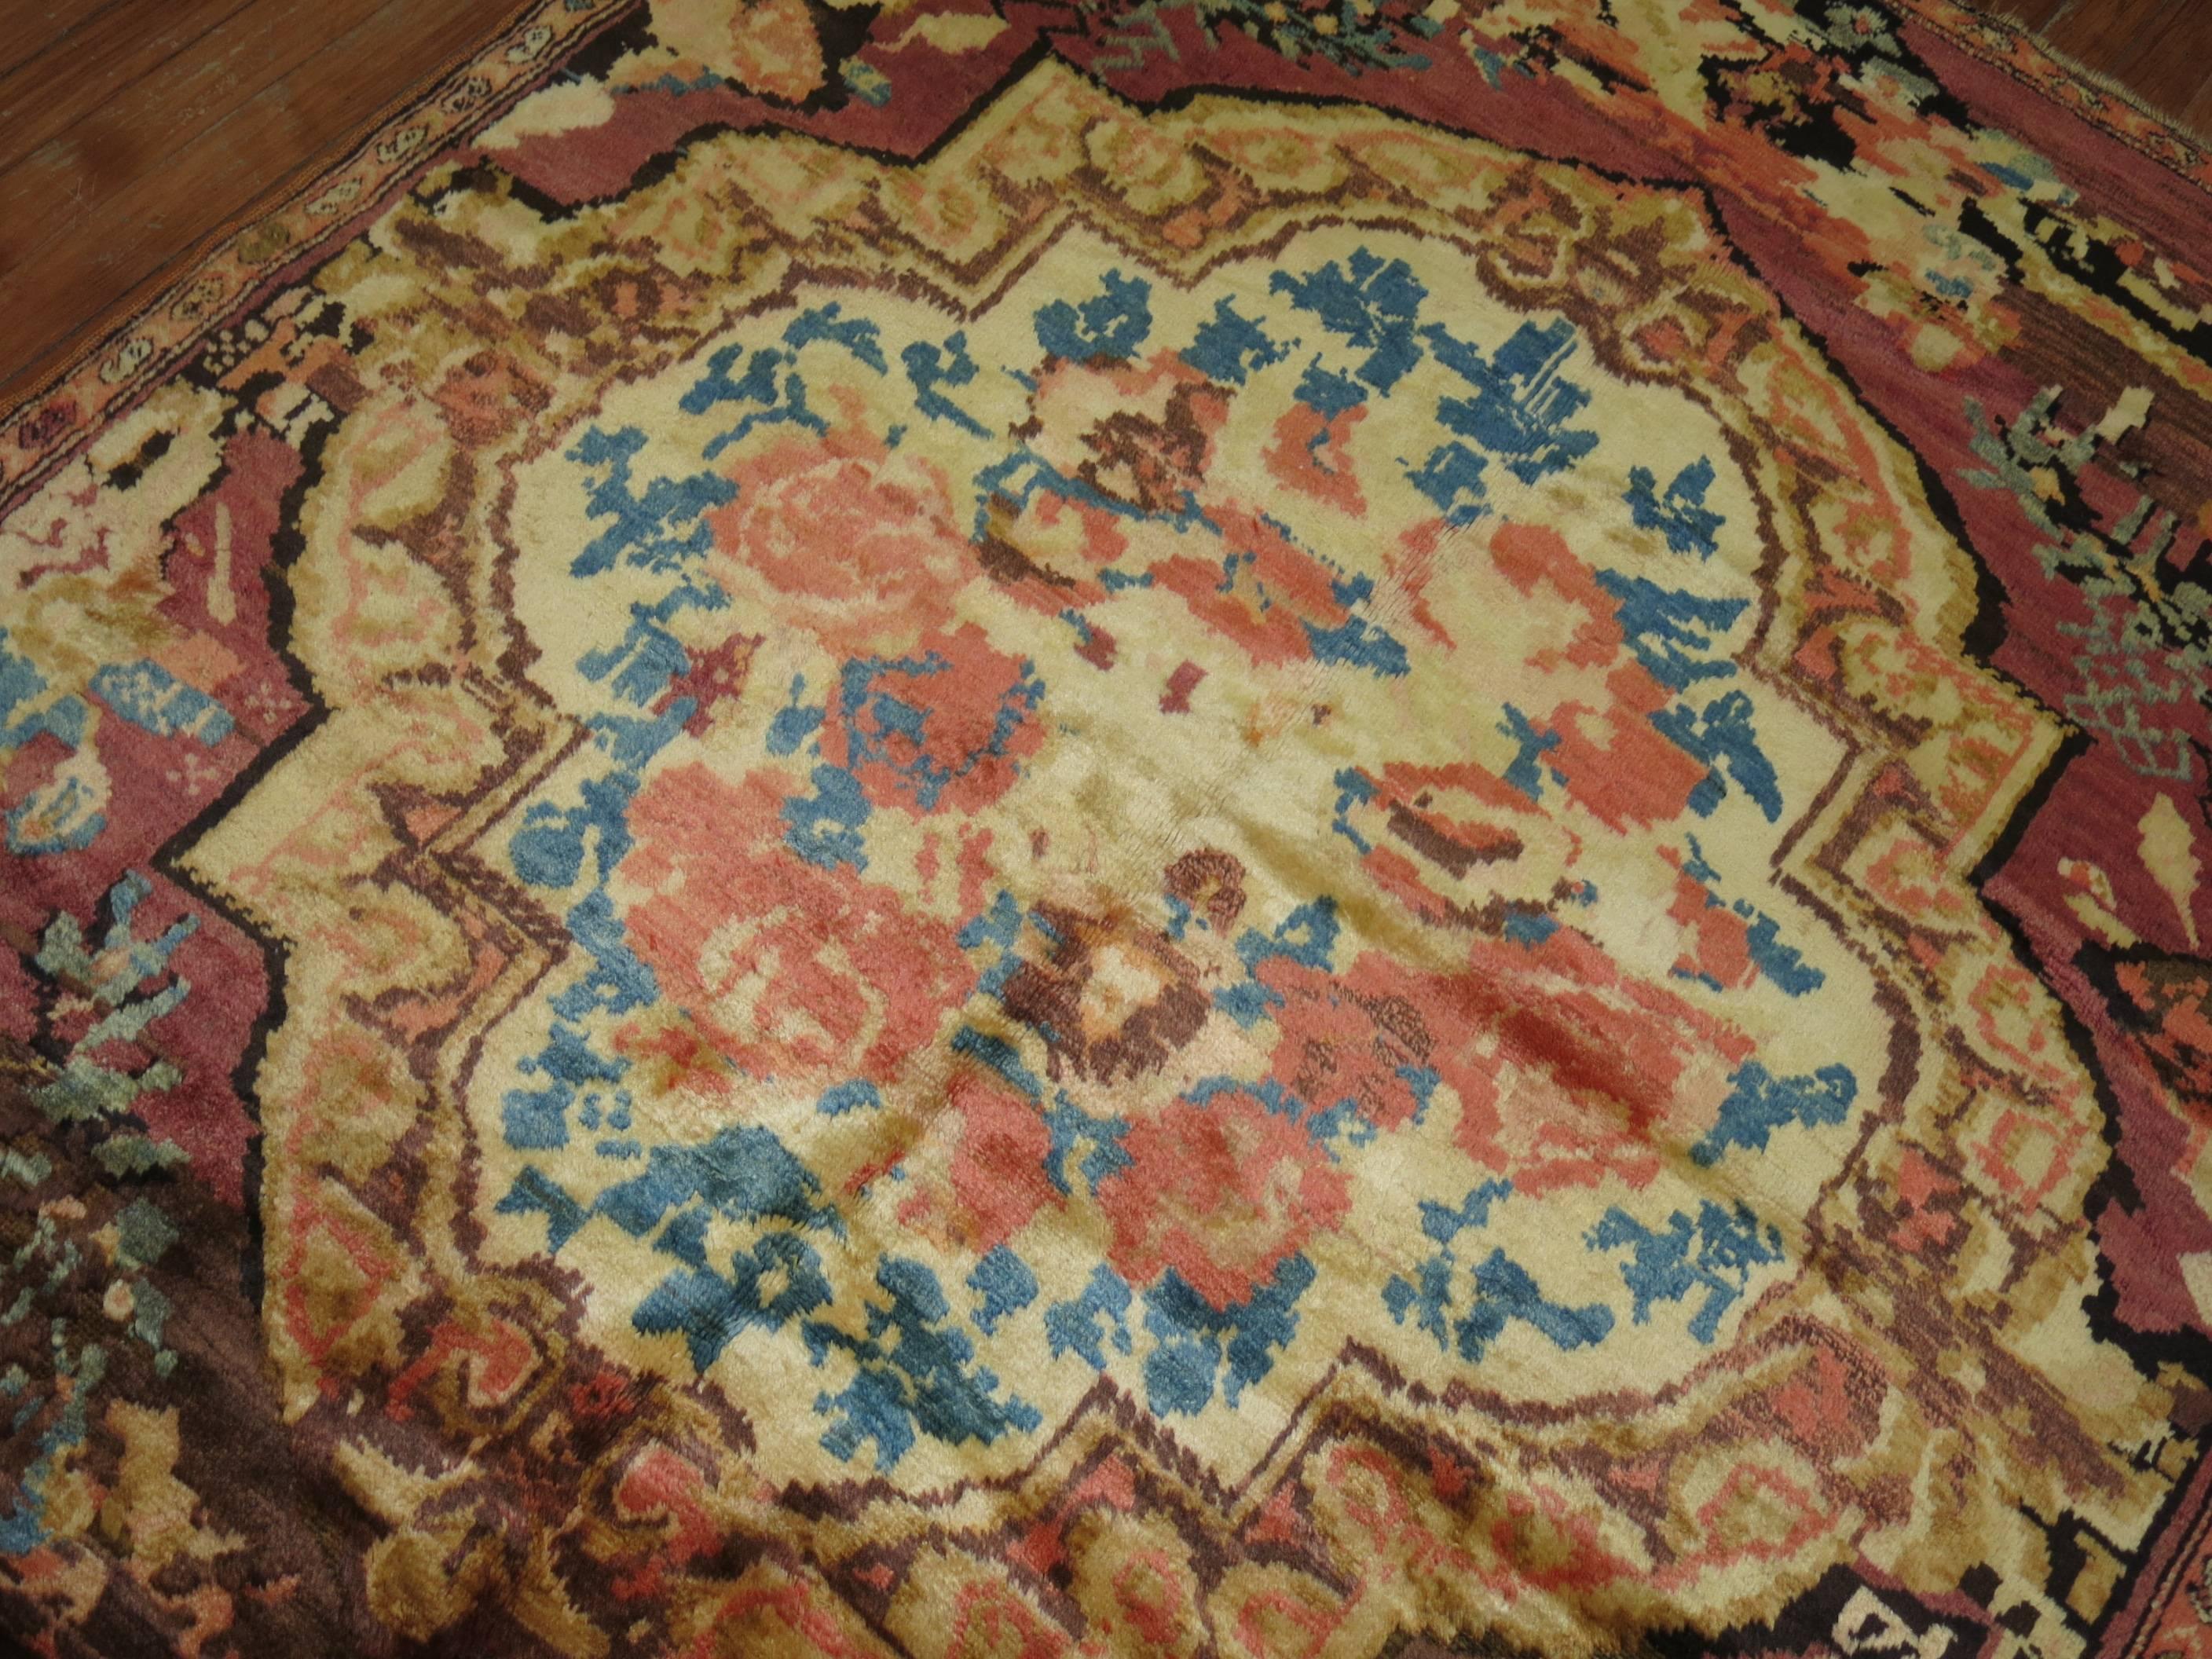 Muave Brauner handgewebter antiker armenischer geblümter Karabagh-Teppich, datiert 1934 im Angebot 2